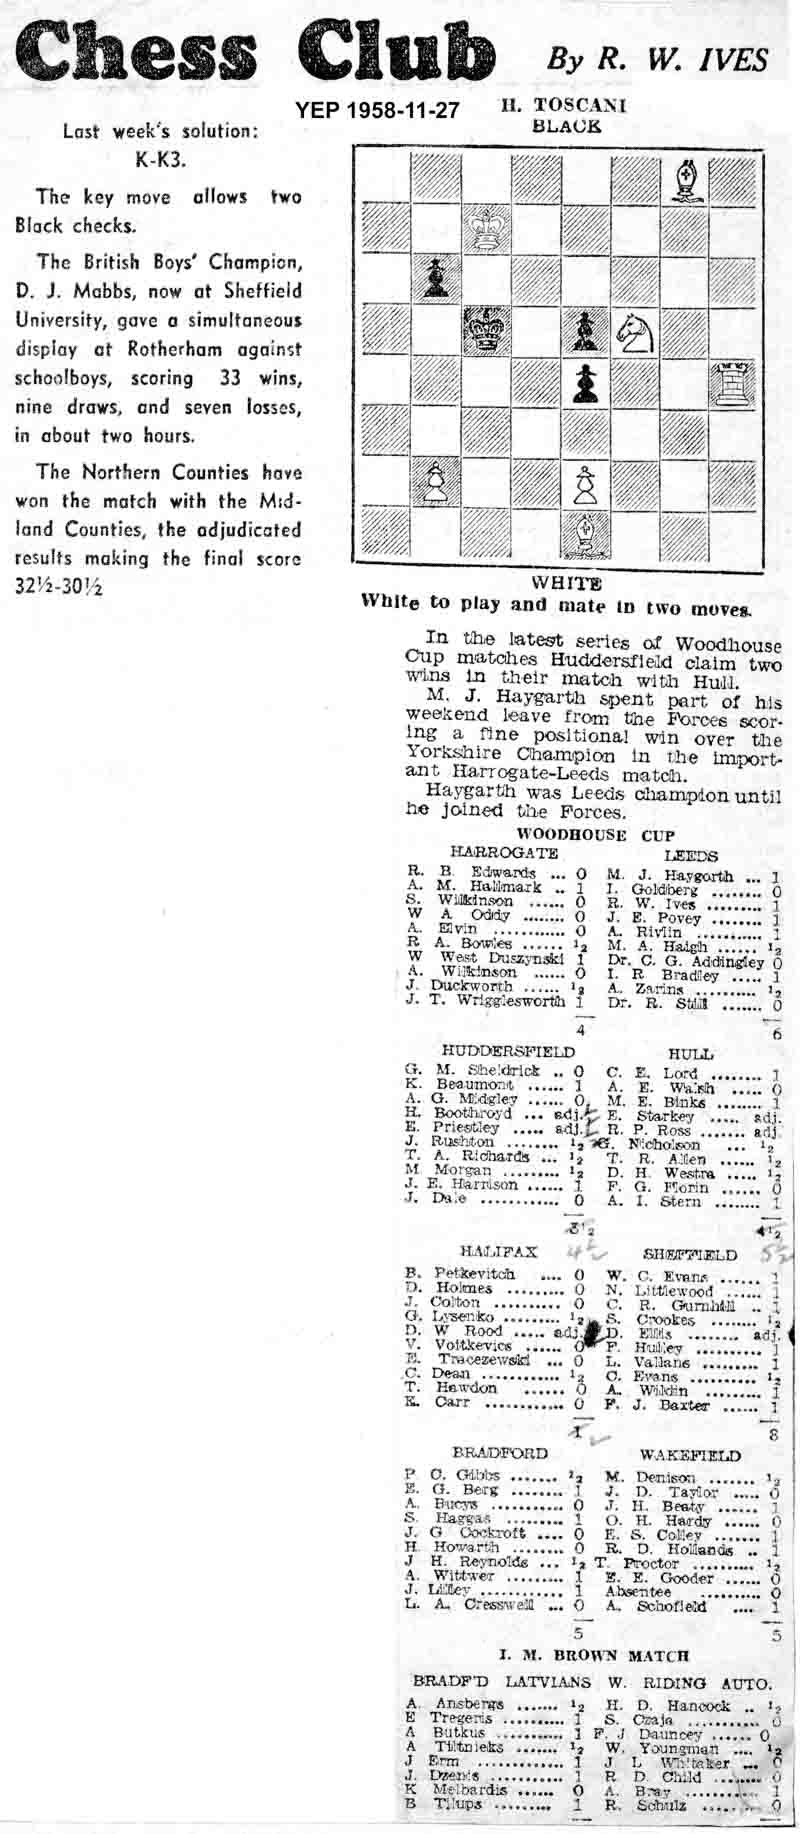 27 November 1958, Yorkshire Evening Post, chess column